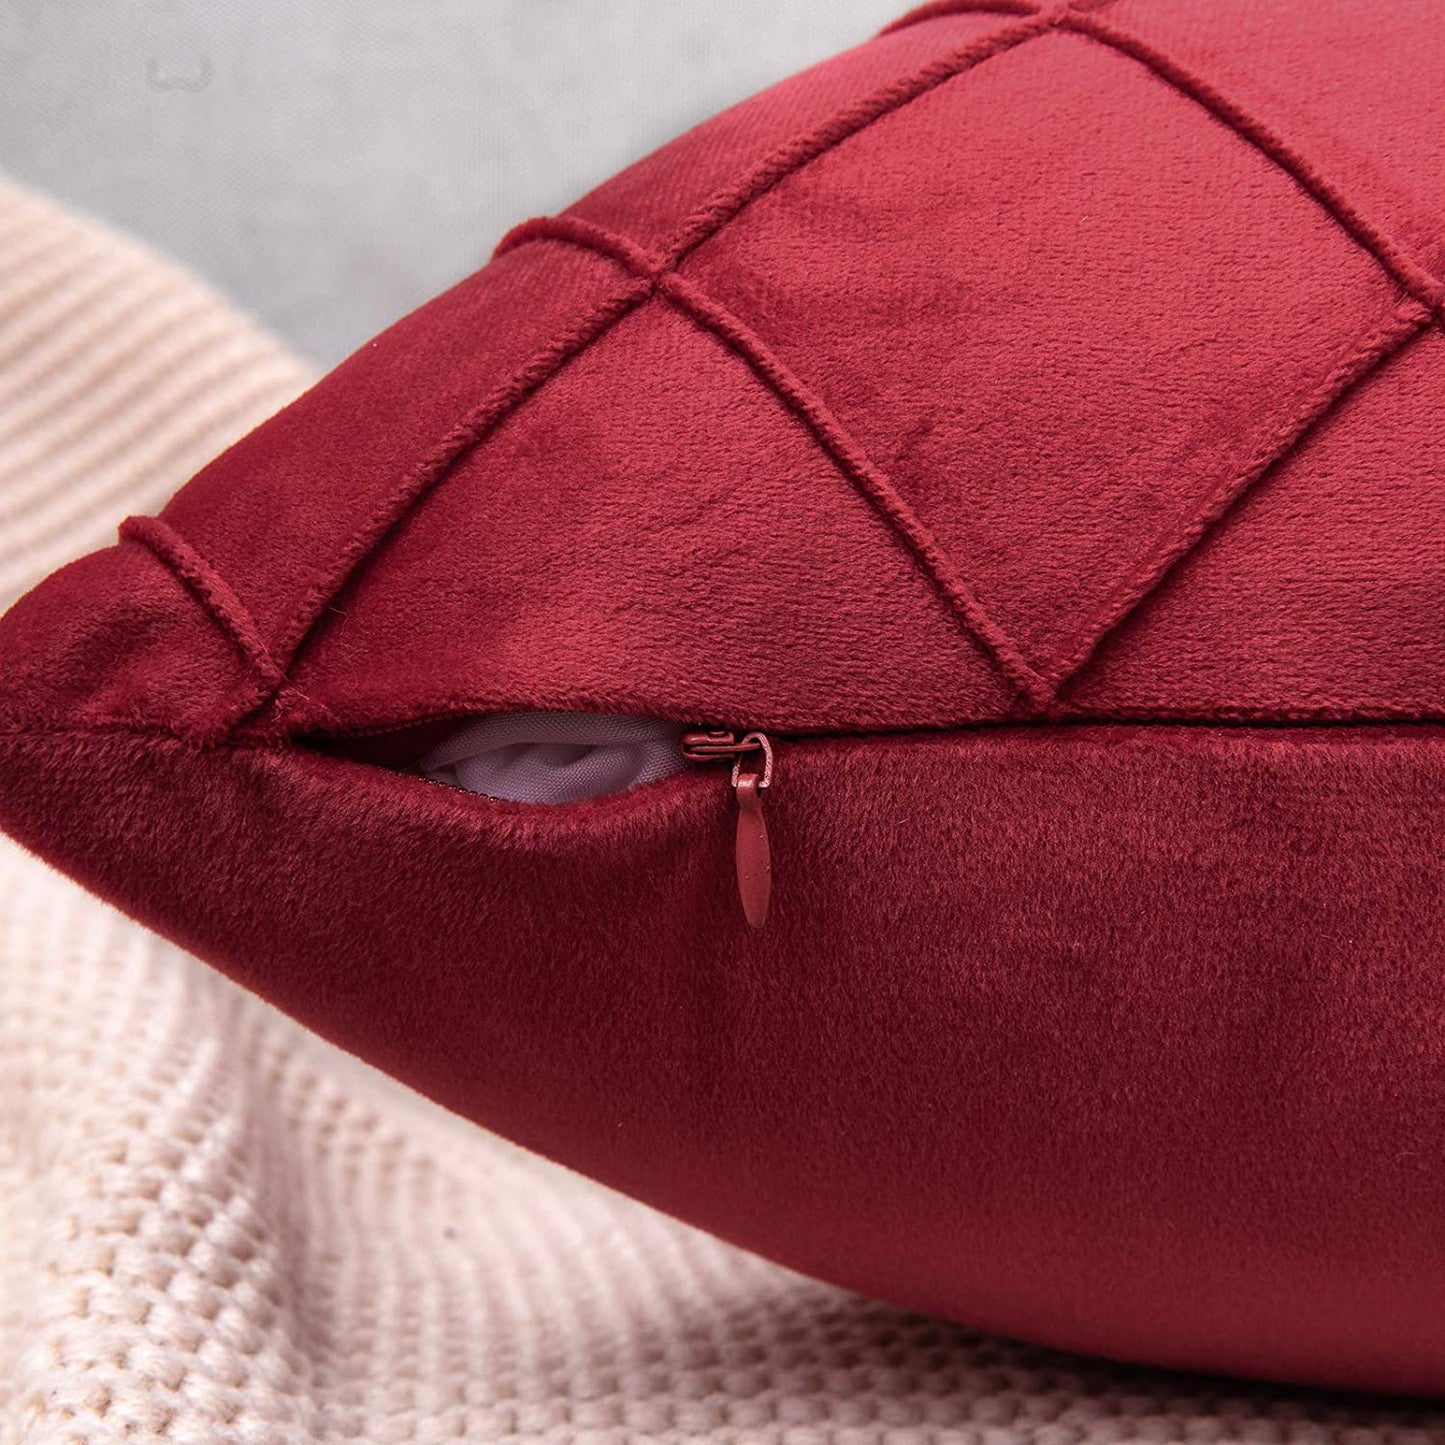 Velvet Cushion Cover Square Pattern 16 X 16 Inches - Reddish Maroon